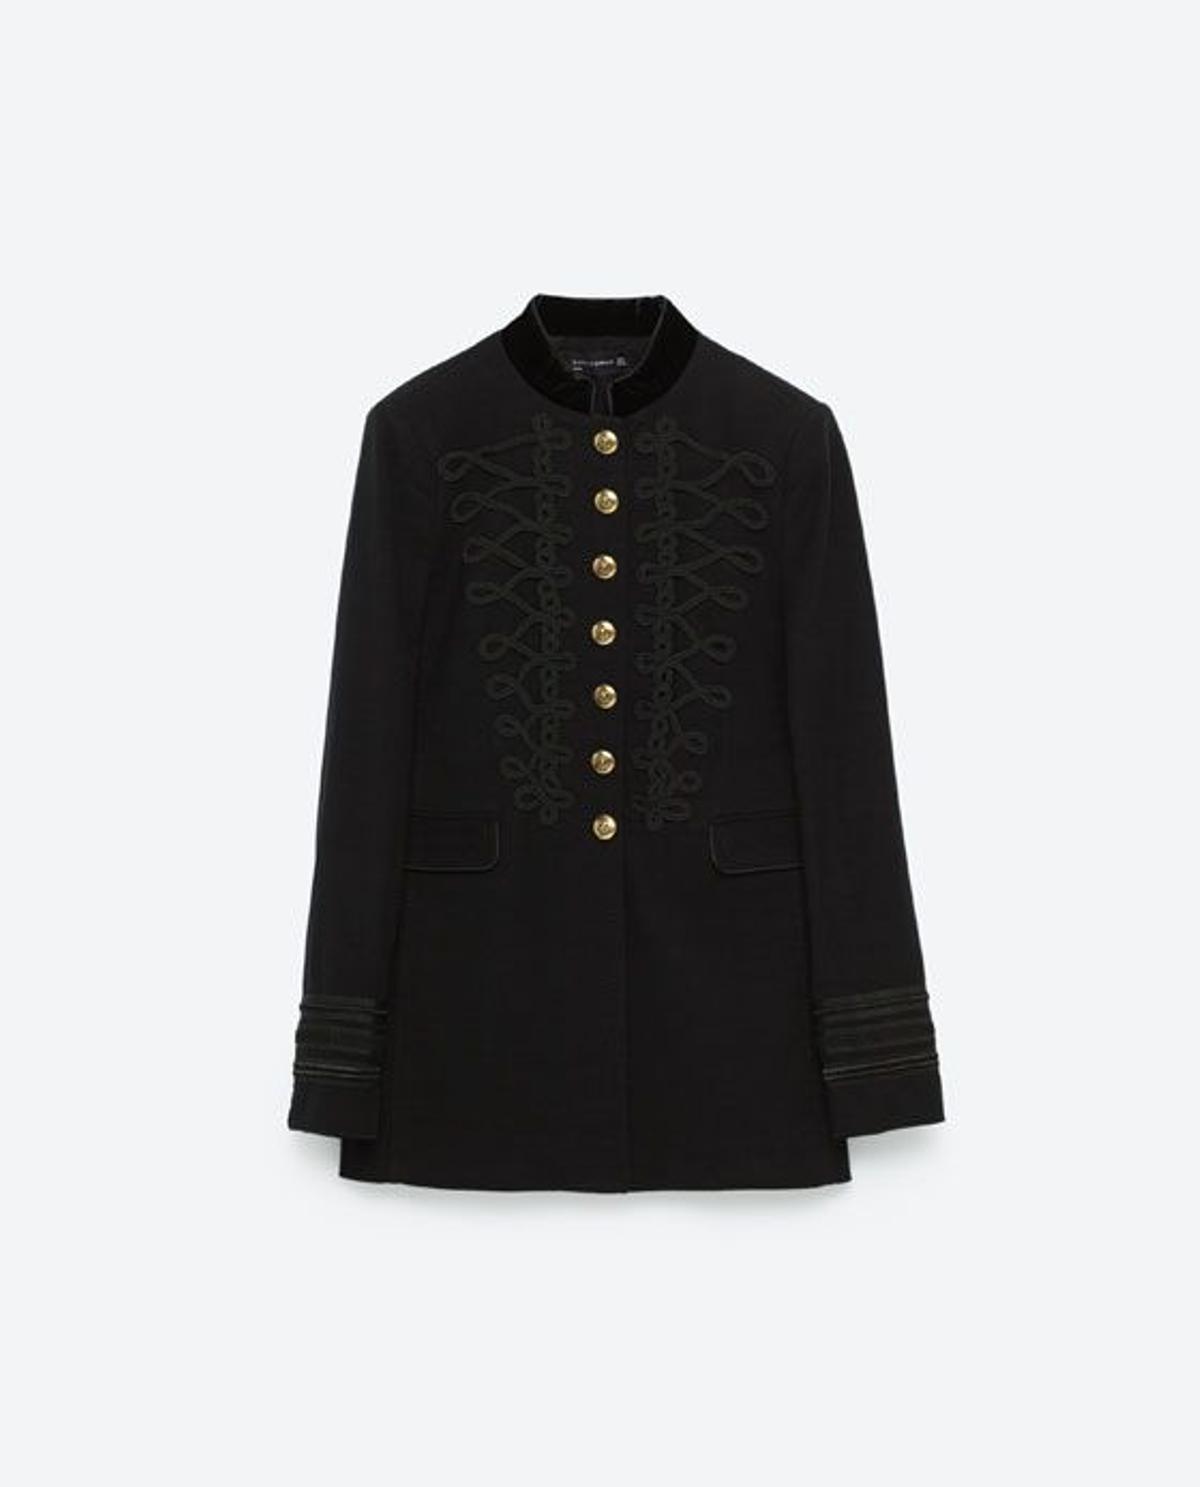 Rebajas 2017, chaqueta militar negra de Zara (59,99€)